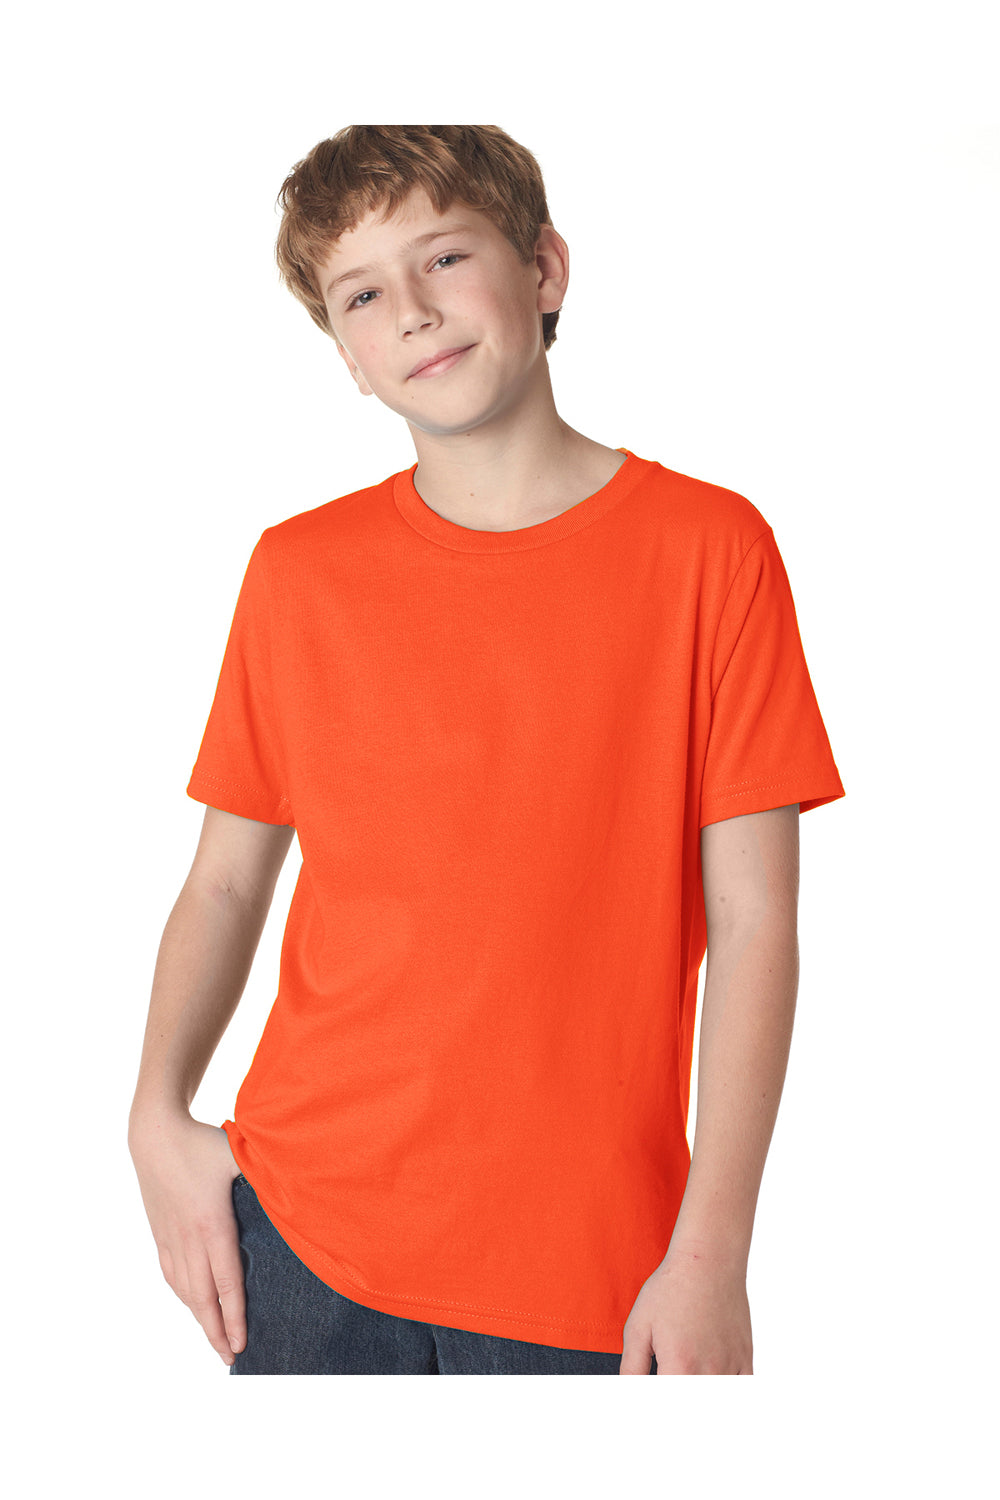 Next Level 3310 Youth Fine Jersey Short Sleeve Crewneck T-Shirt Orange Front